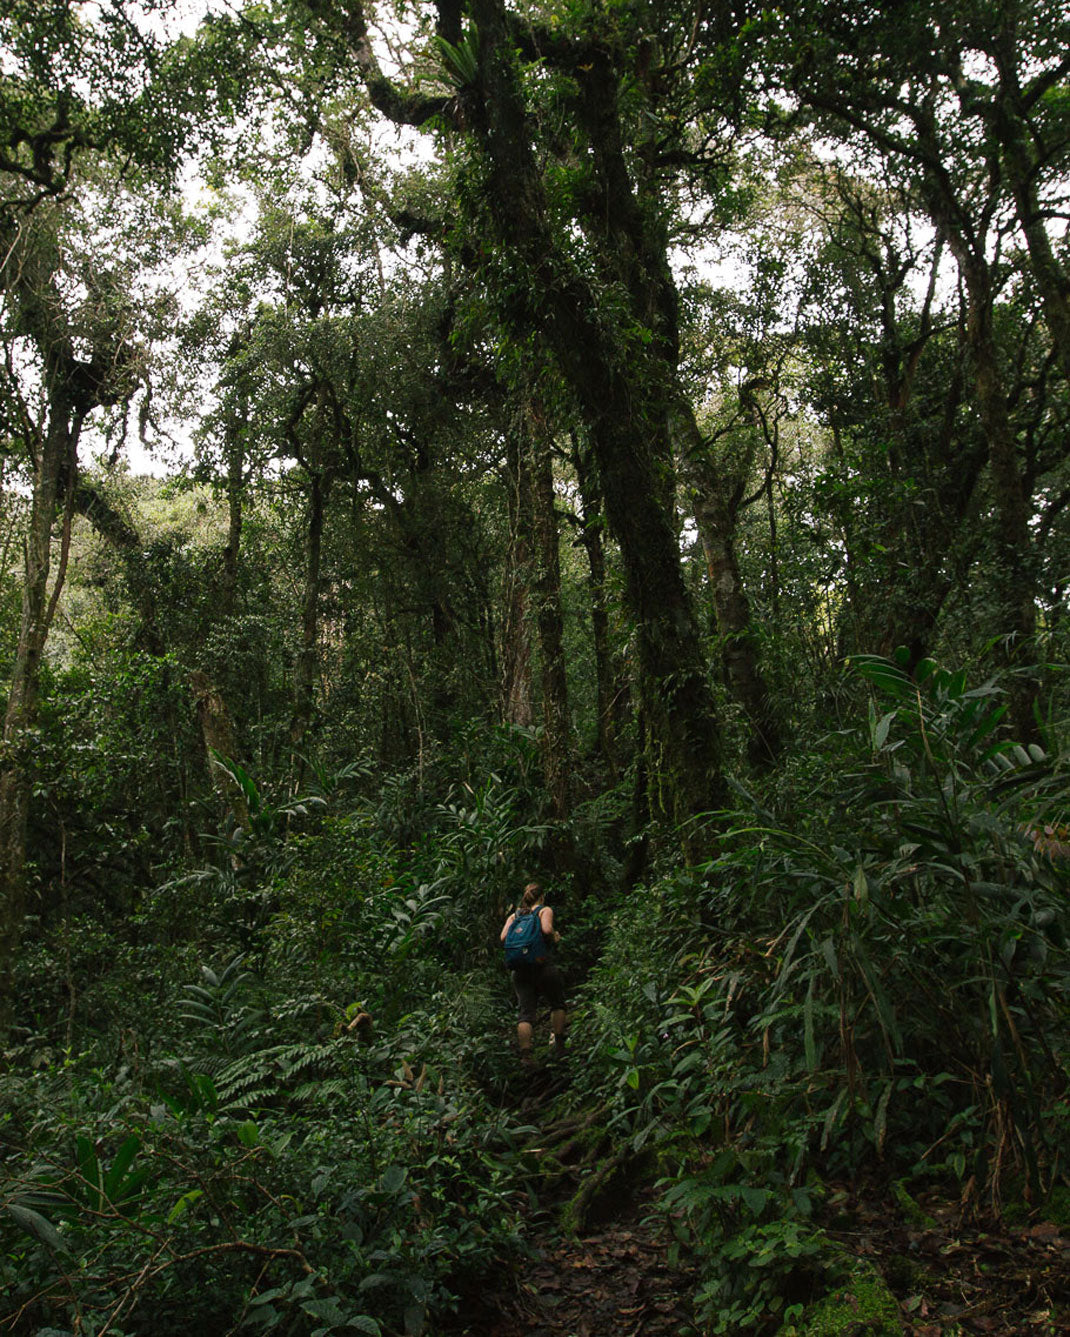 Hiking through dense forest